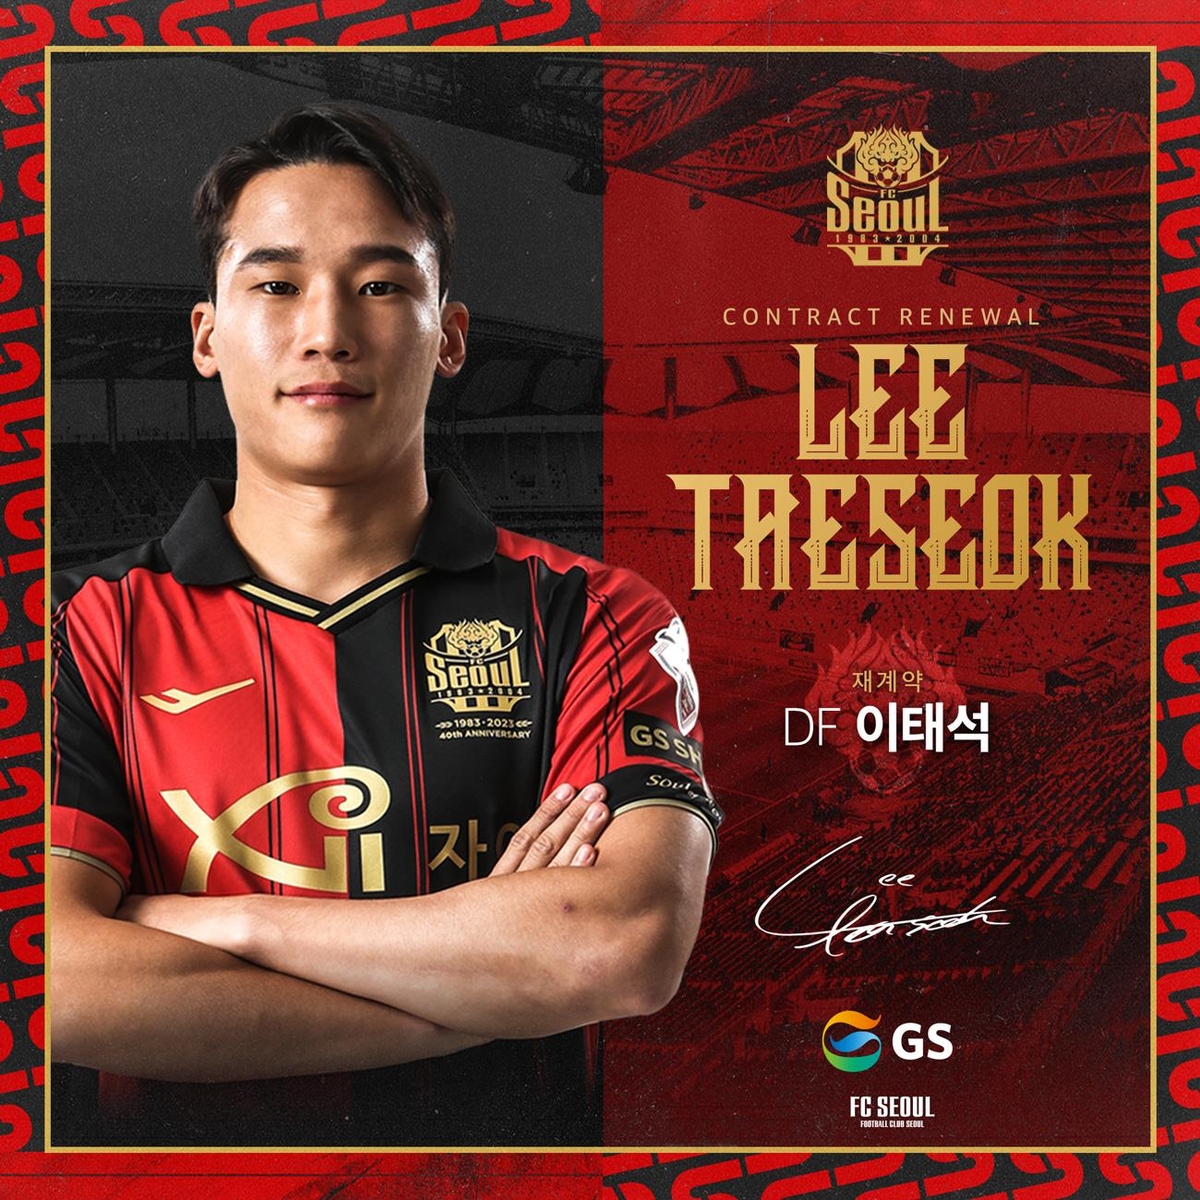 FC Seoul renews contract with Lee Tae-seok